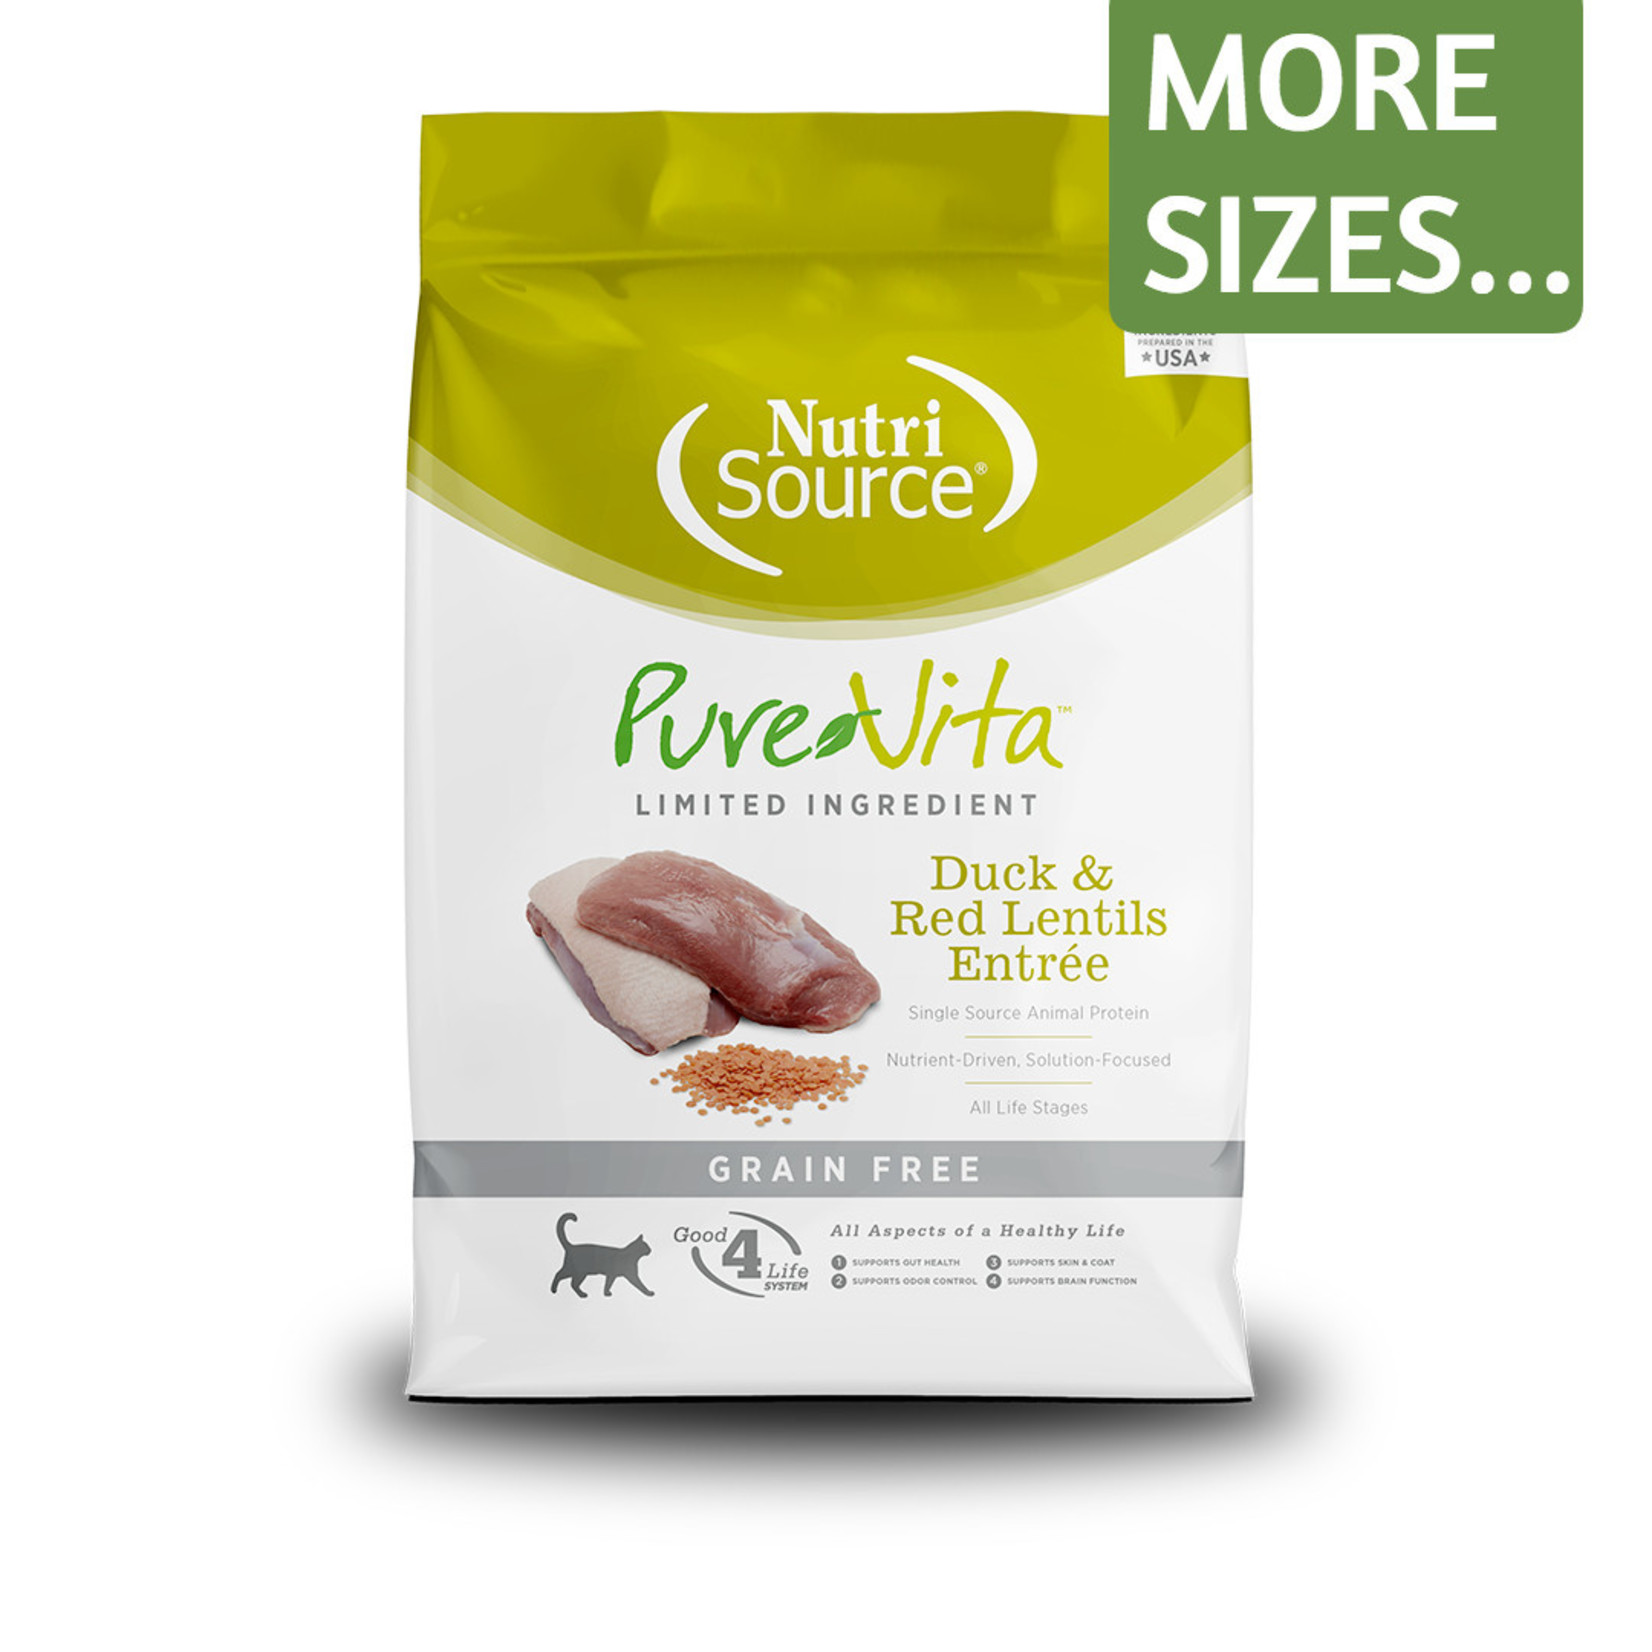 NutriSource Nutrisource Pure Vita Dry Cat Food Duck & Red Lentils Entree Limited Ingredient Grain Free